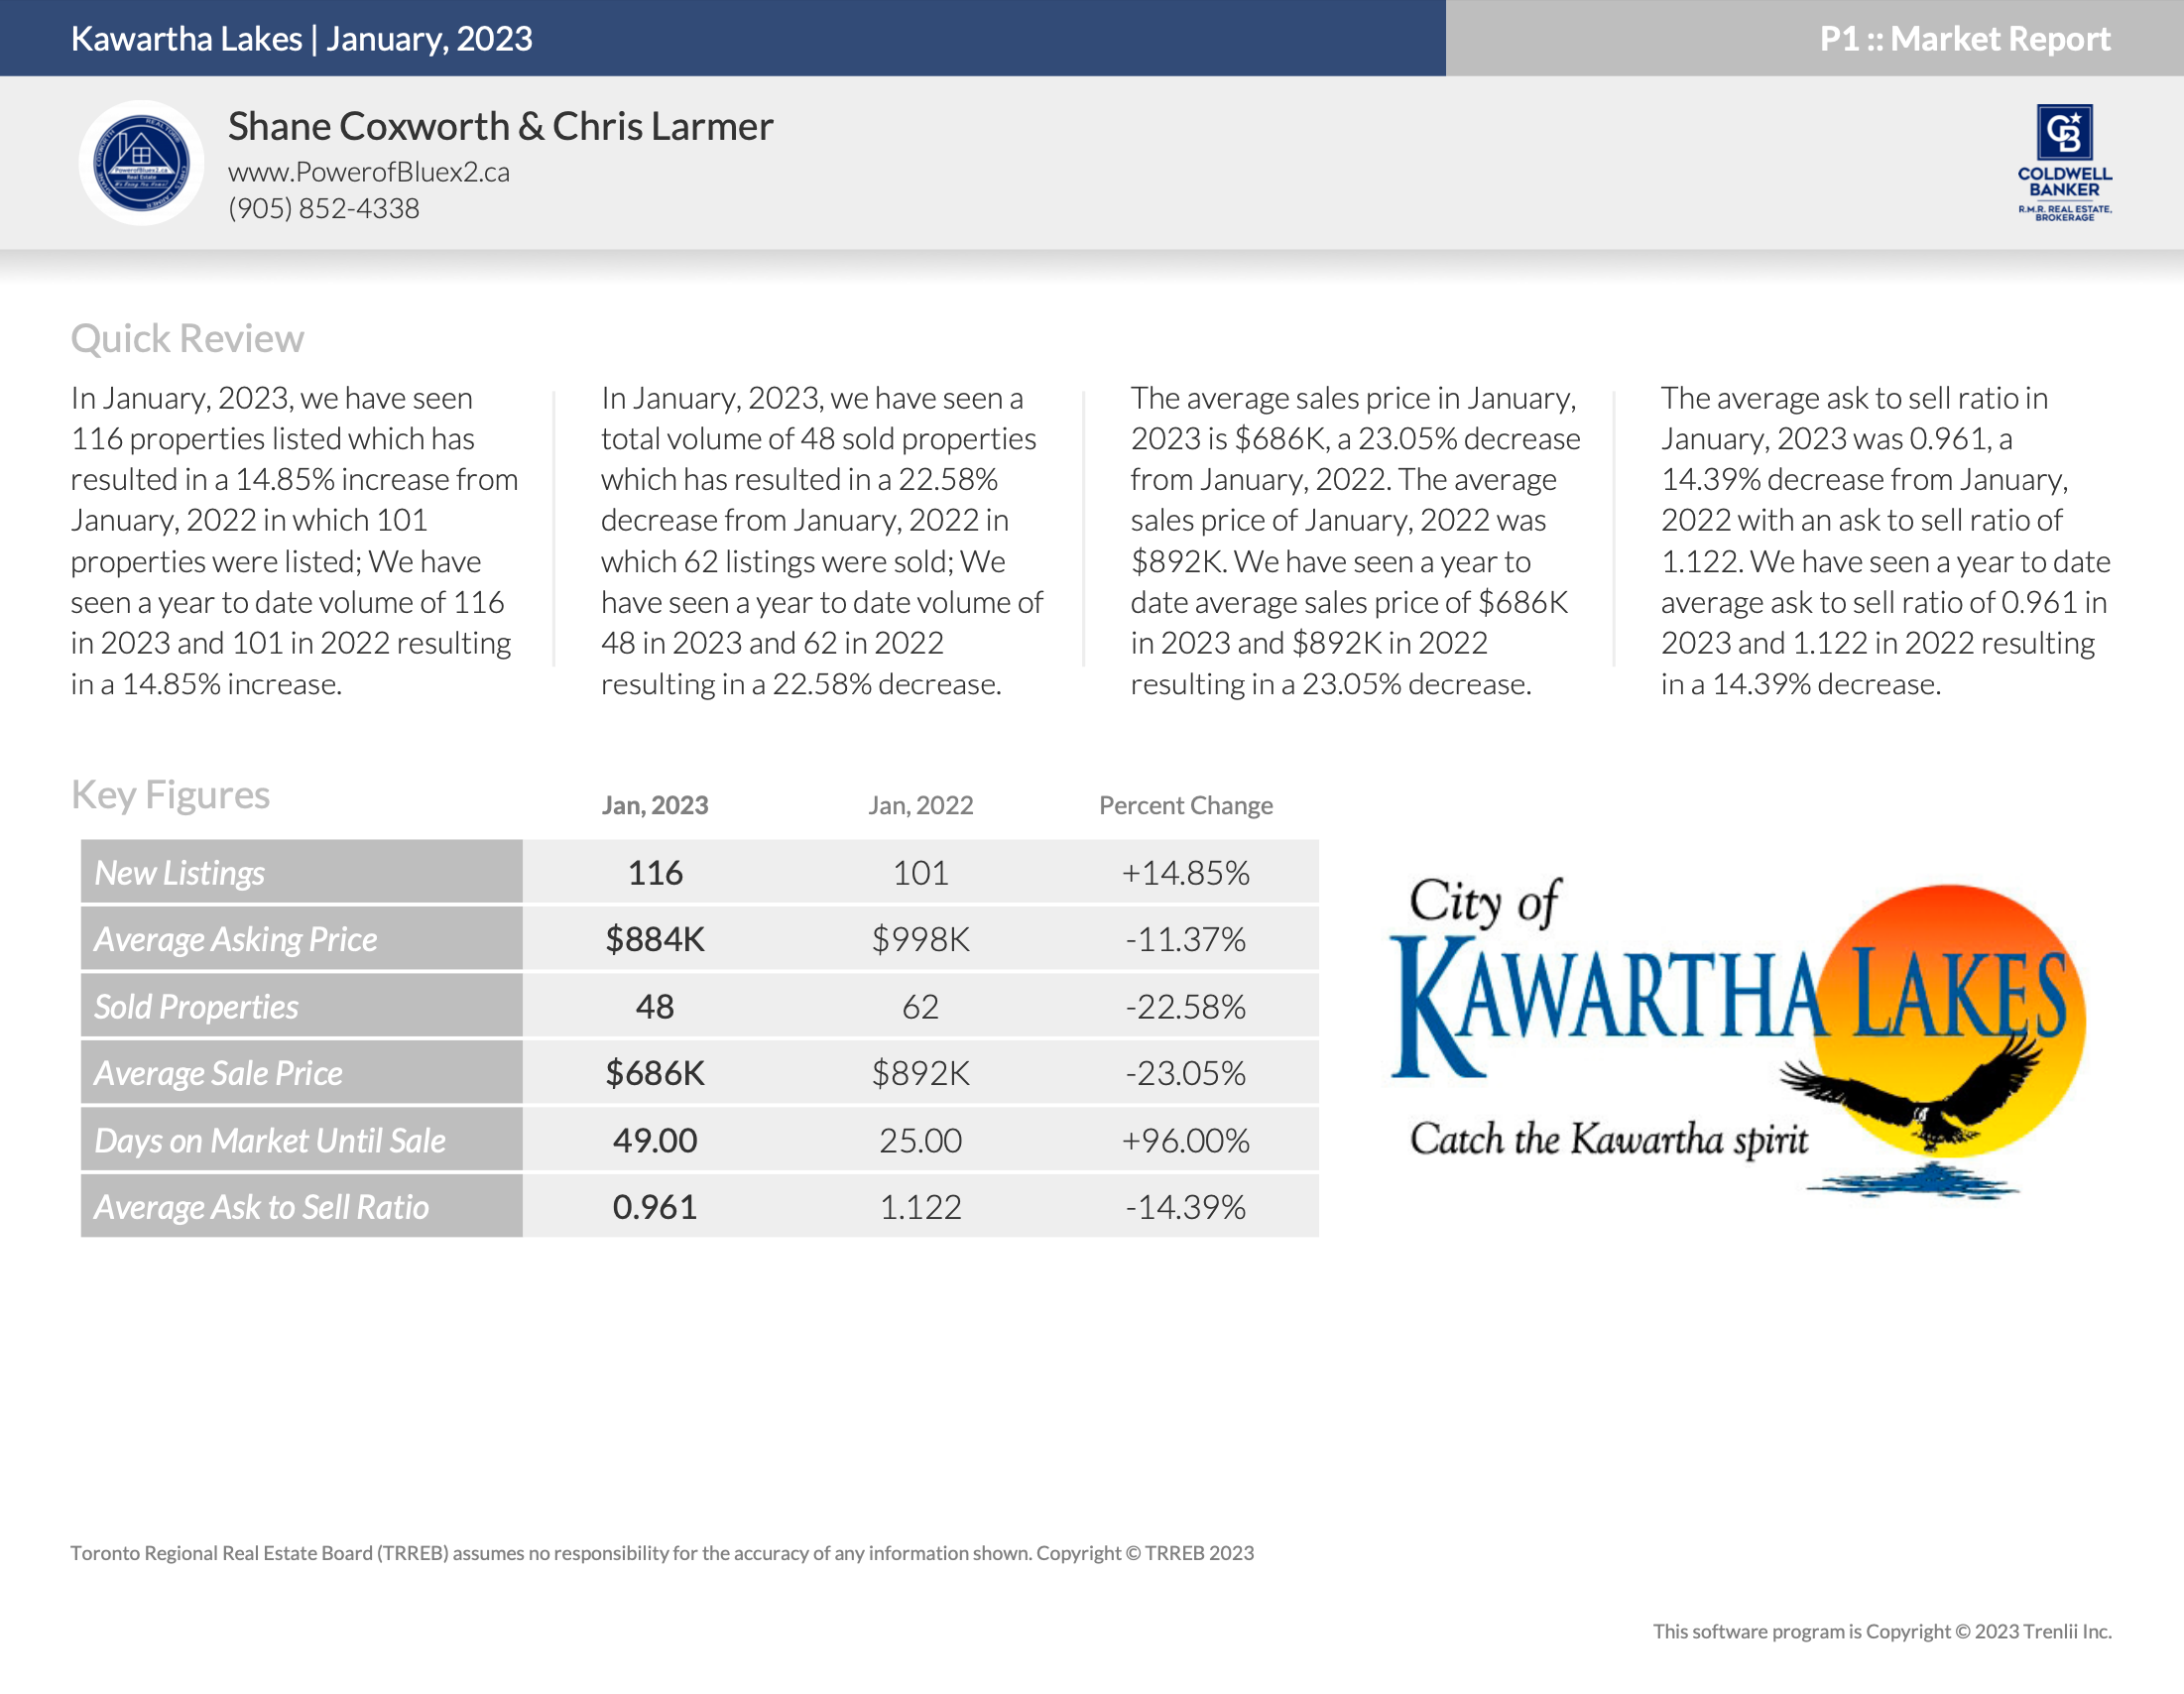 Kawartha Lakes Housing Market Quick Review